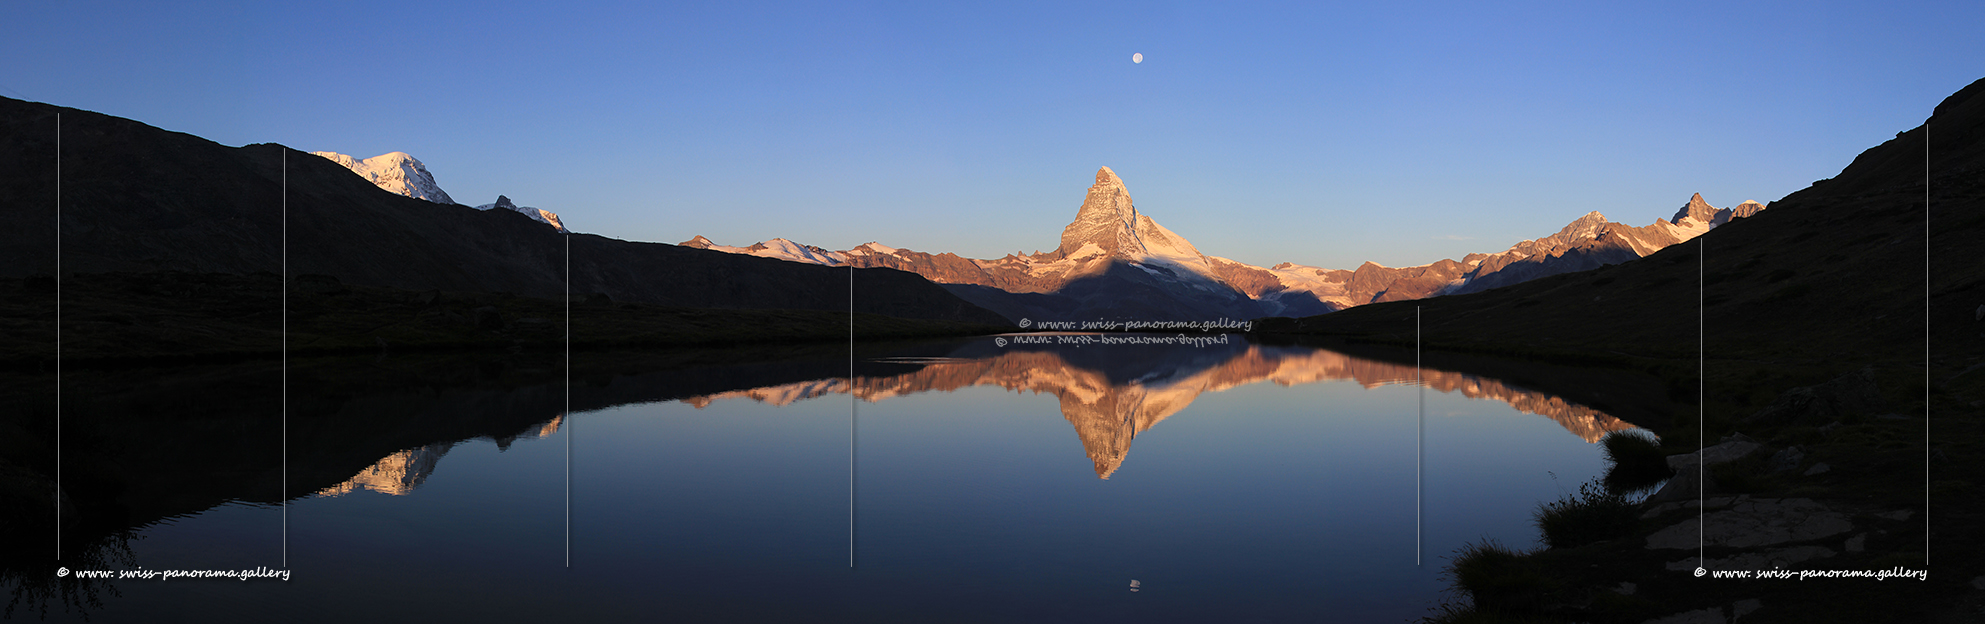 swiss-panorama.gallery Stellisee Sonnenaufgang Vollmond Matterhorn reflections panoramic view